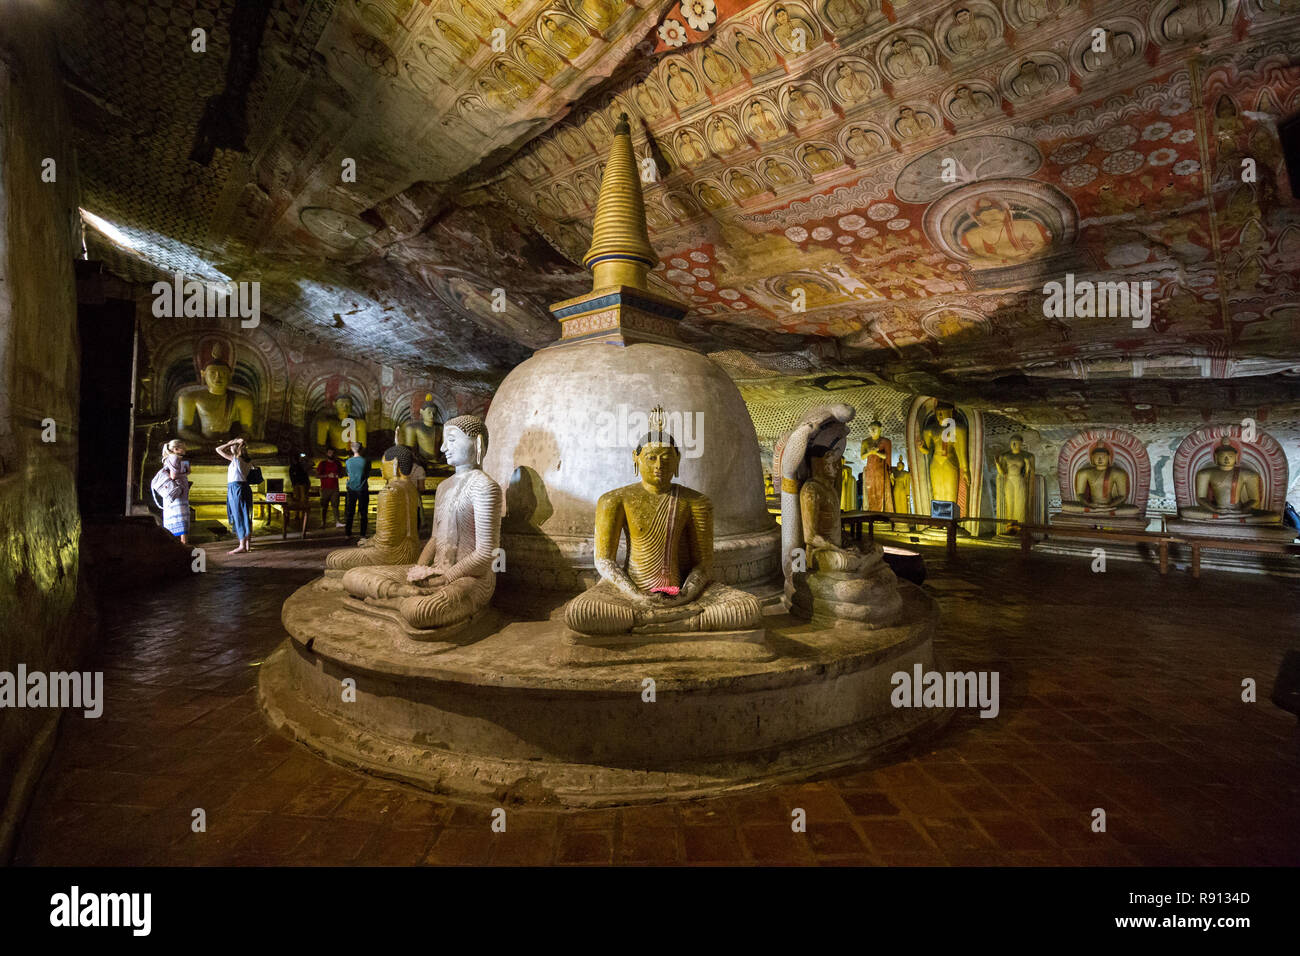 Stupa and statues inside Dambulla Cave Temple, Sri Lanka Stock Photo